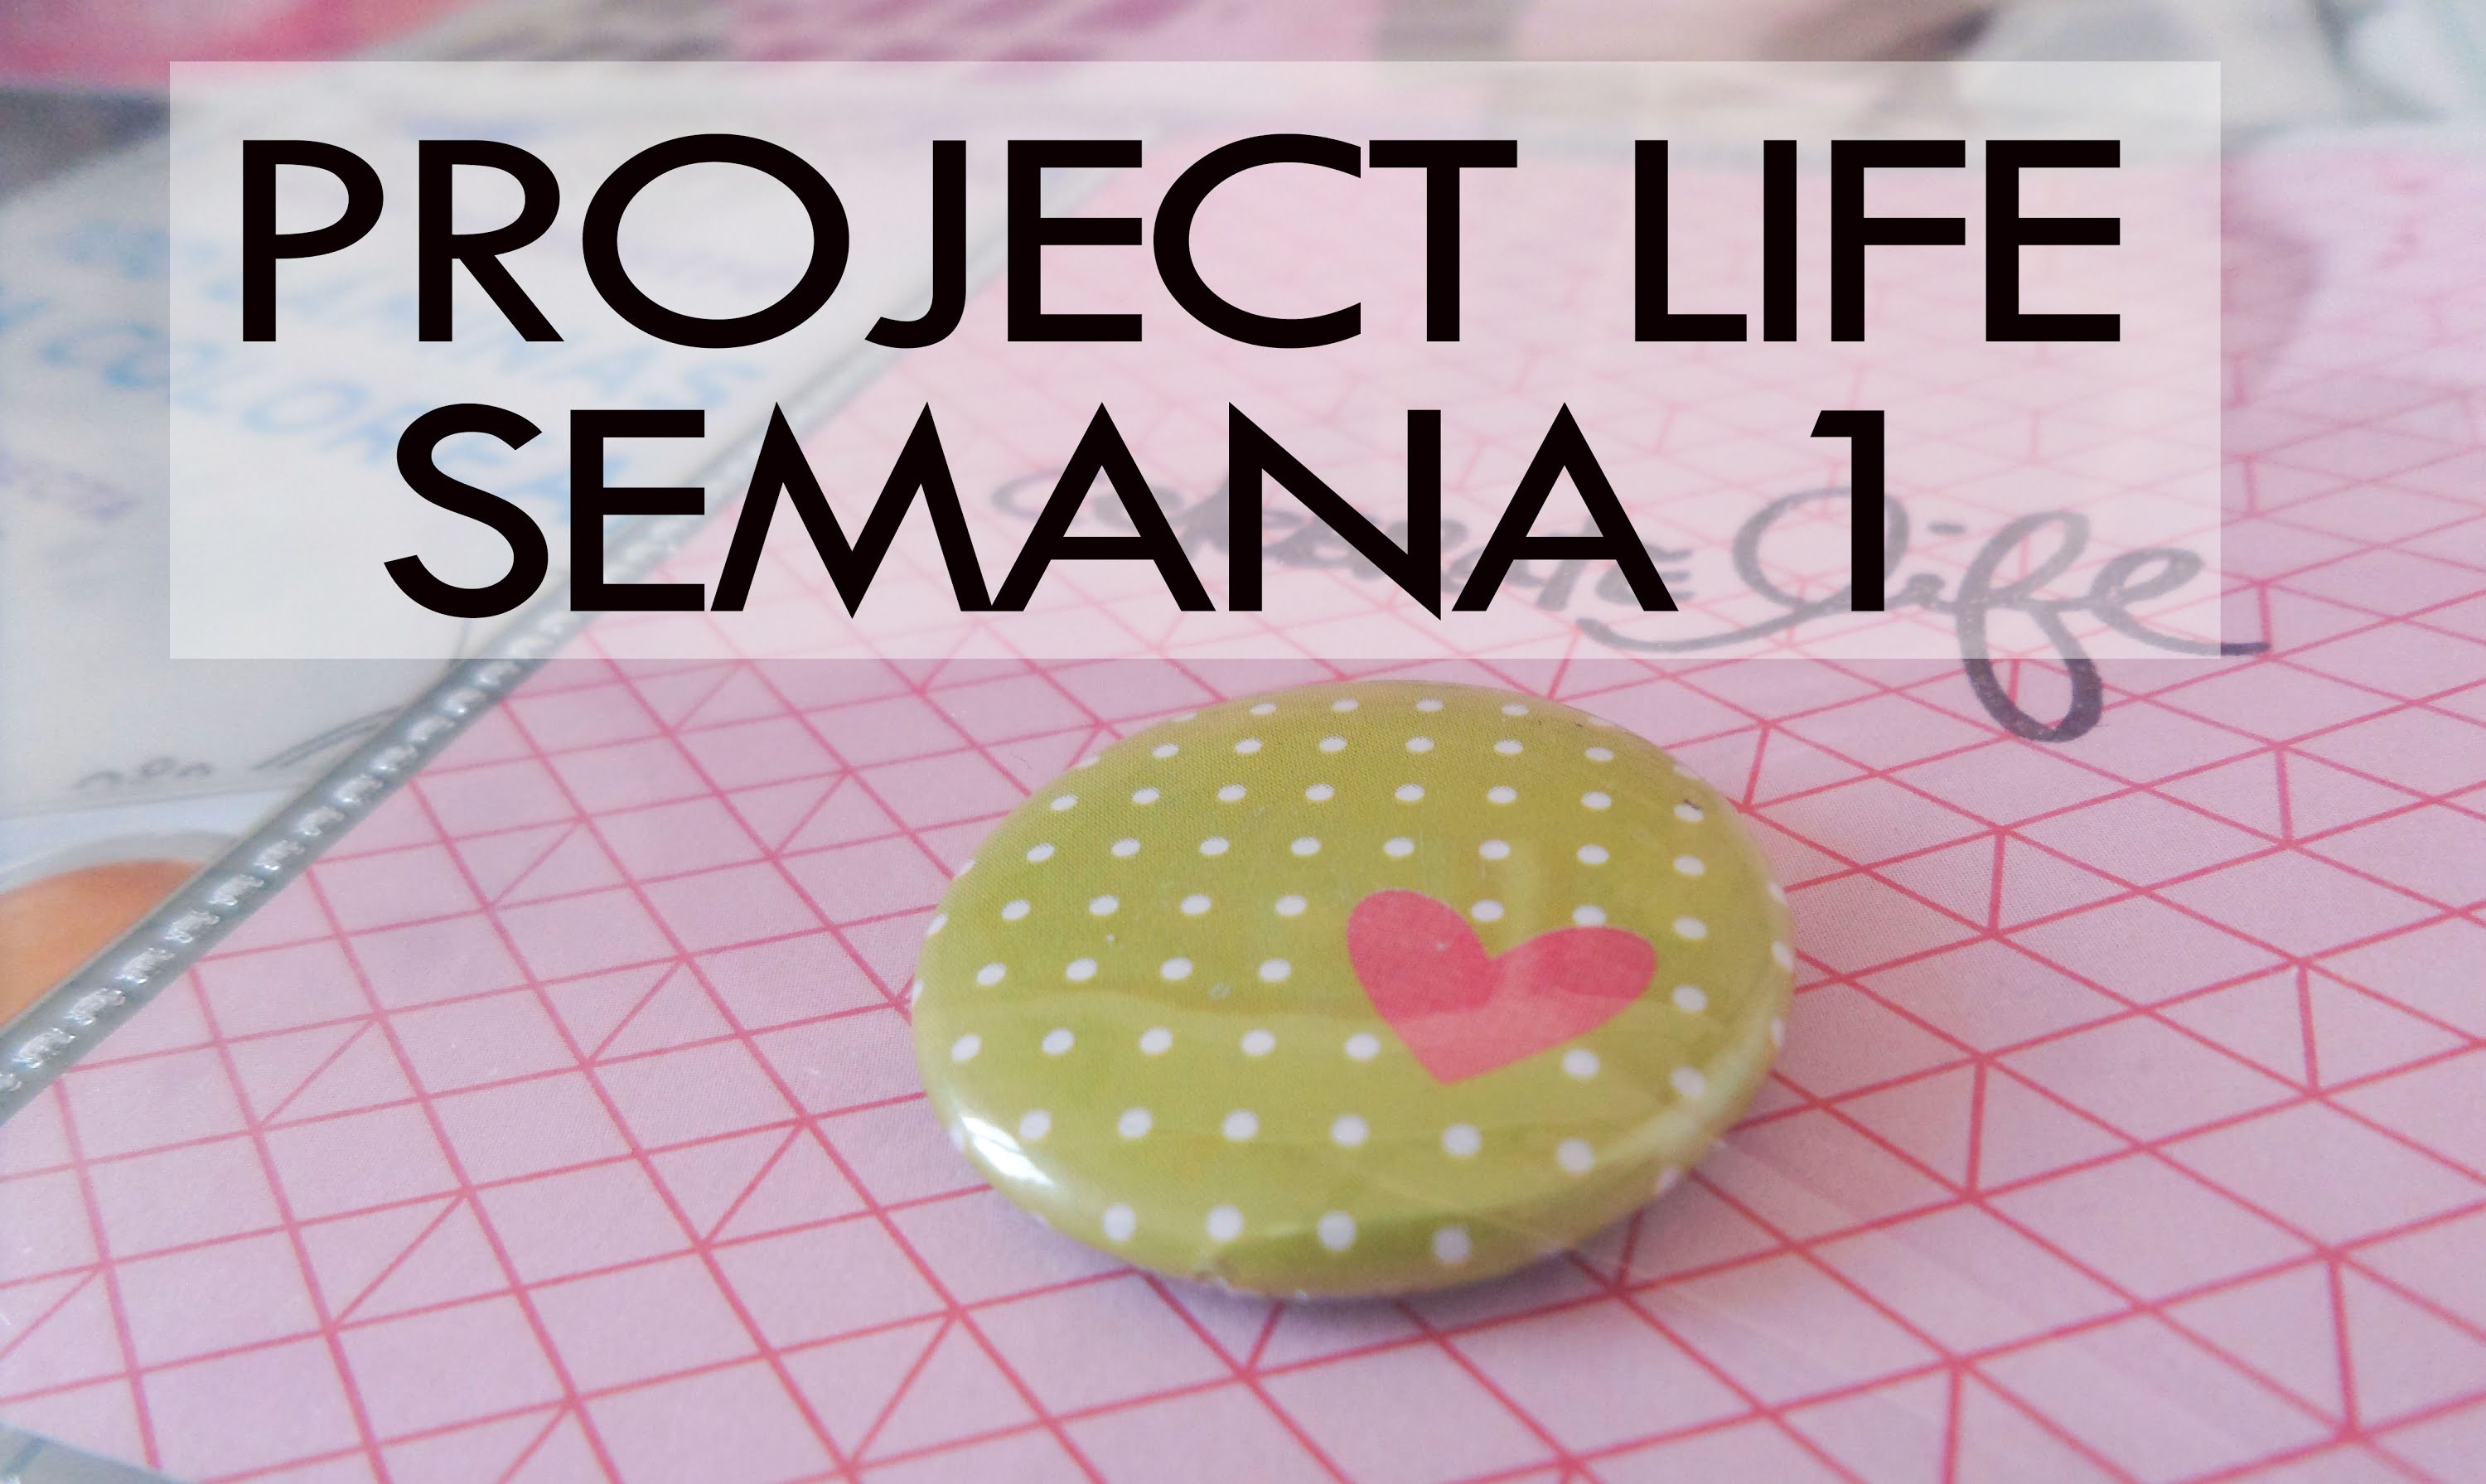 Project life 2015. Semana 1